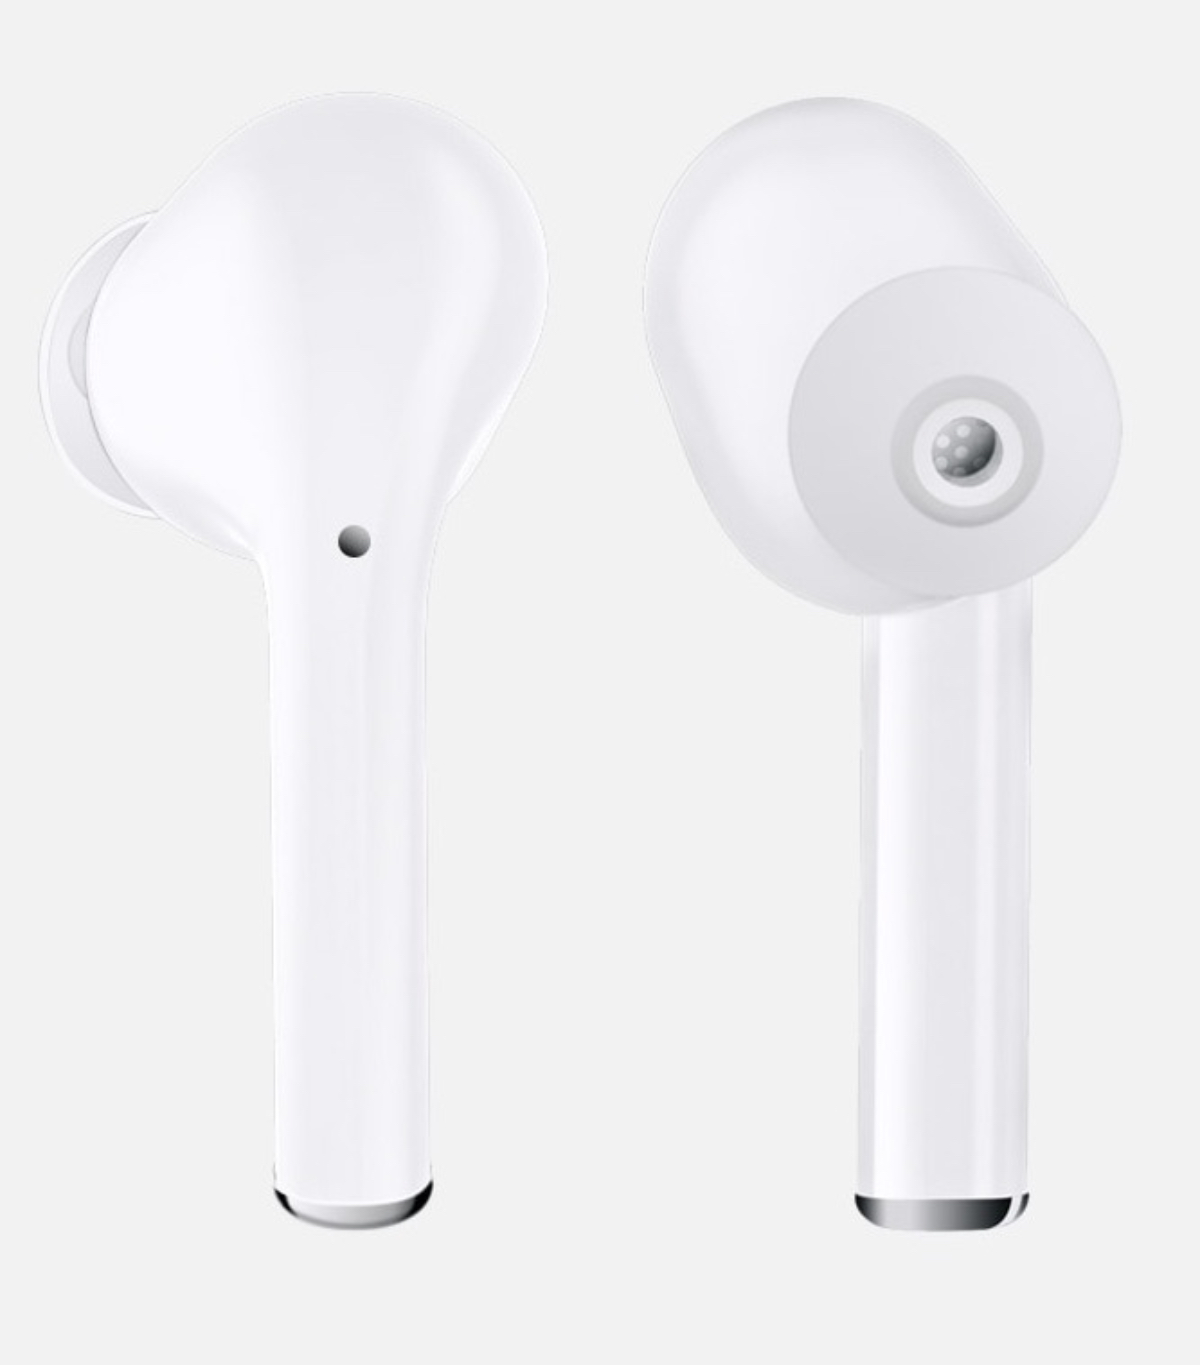 Kopfhörer, Bluetooth Weiß M2-TEC Kopfhörer In-ear